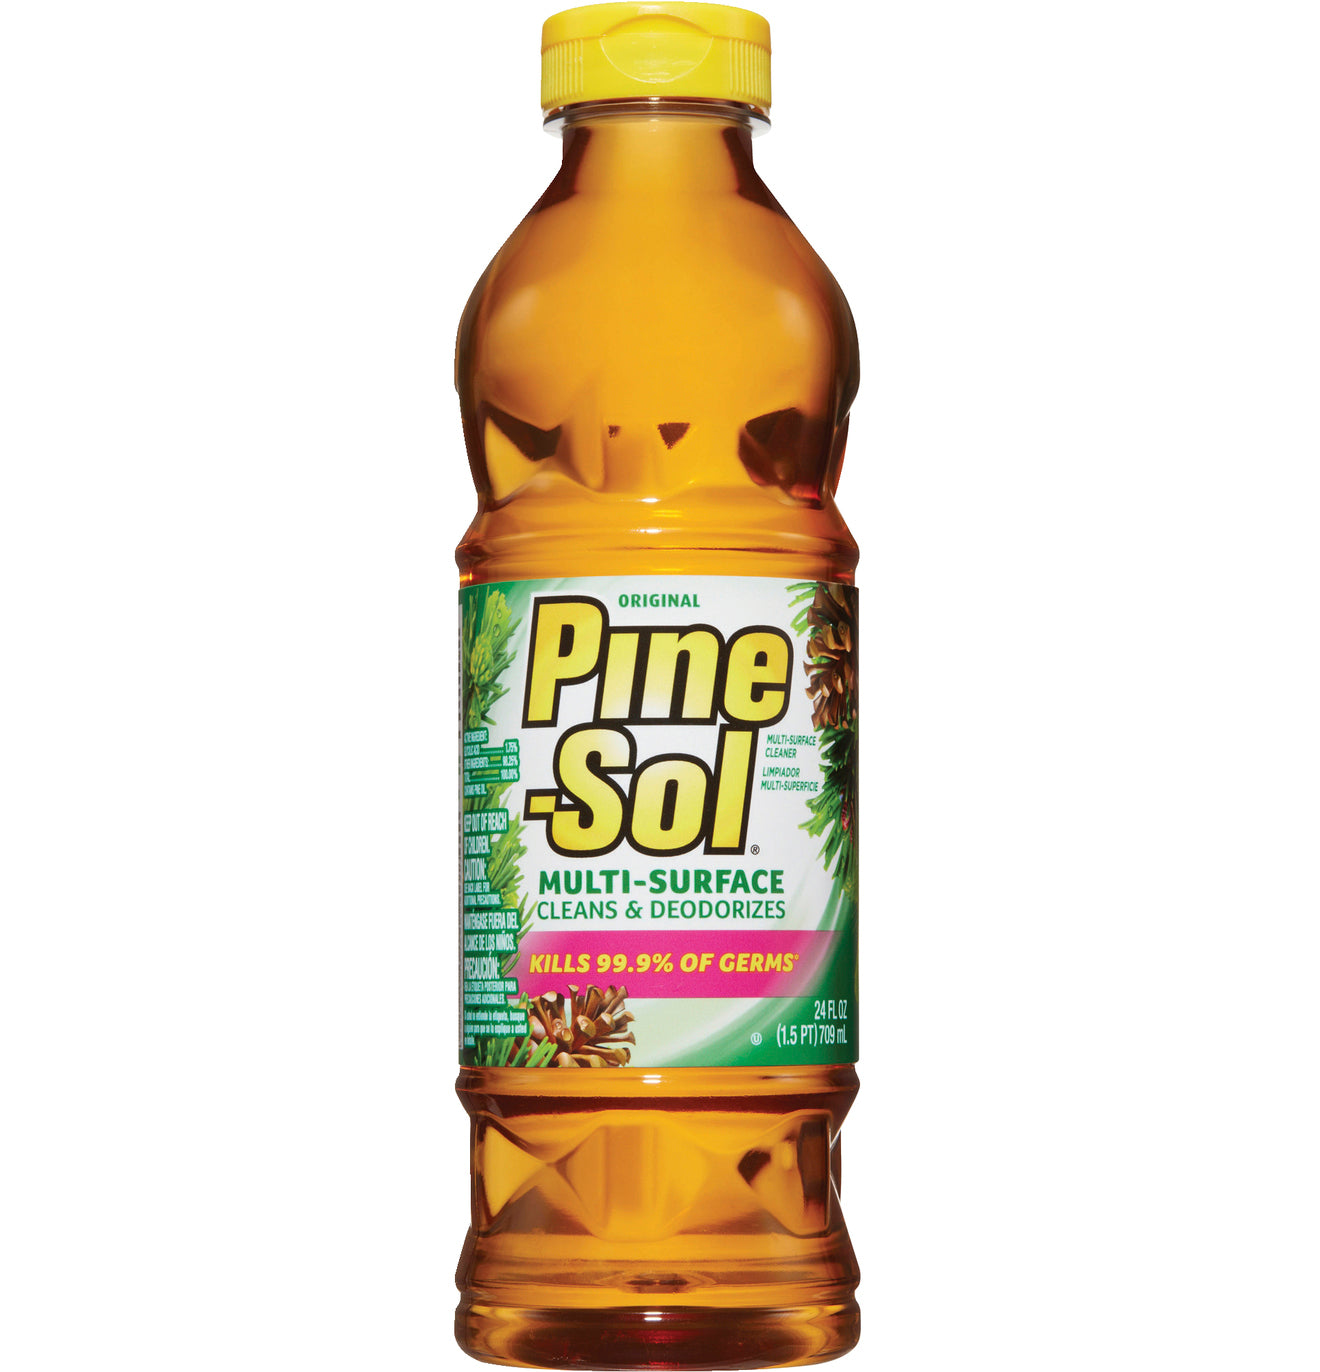 Pine-Sol Original Multi-Surface Cleaner, 24 oz